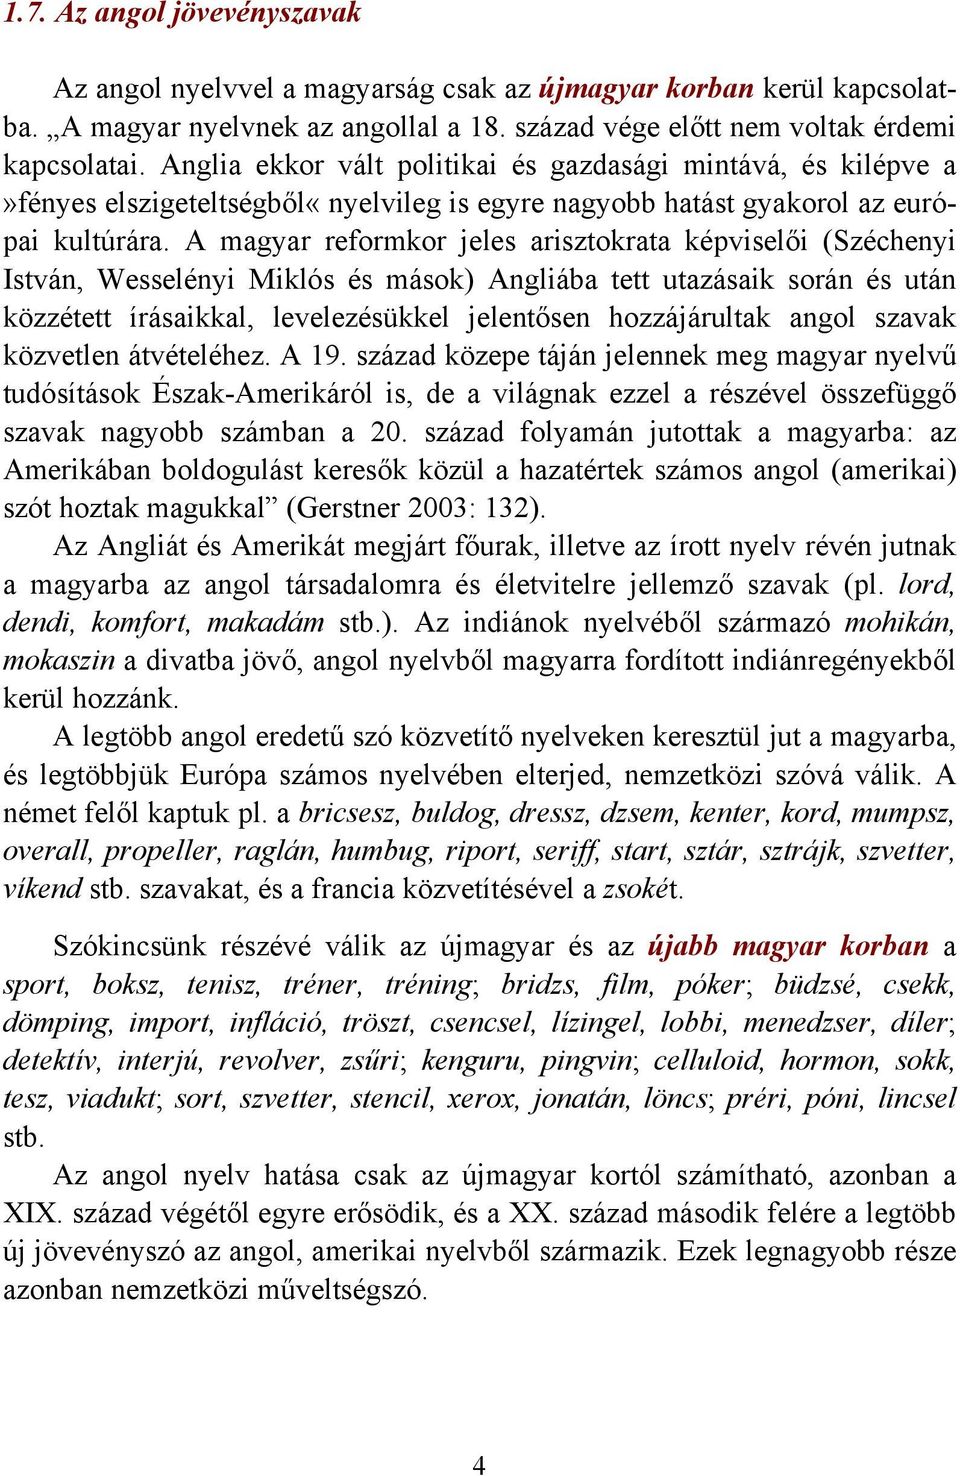 Idegen eredetű szavak a magyar nyelvben 1 - PDF Free Download